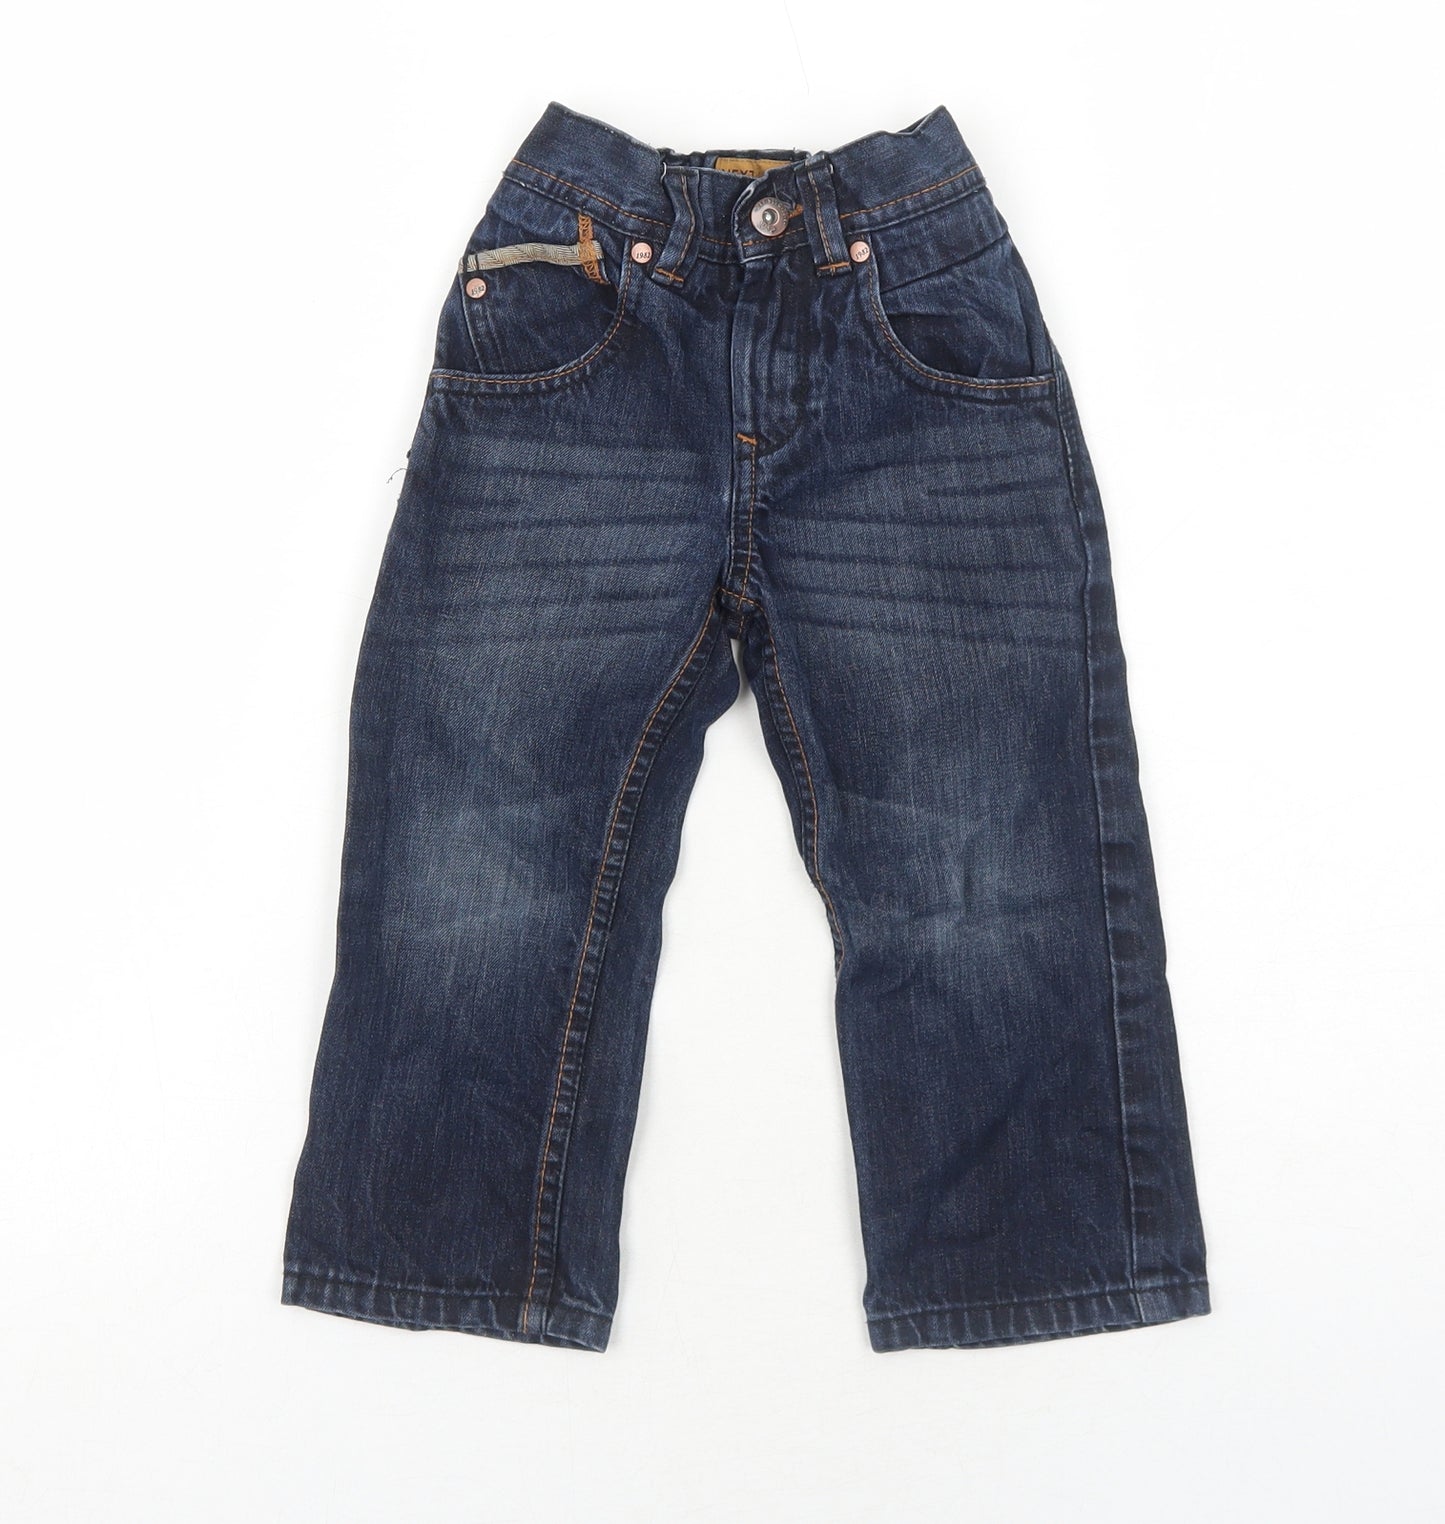 NEXT Boys Blue Cotton Straight Jeans Size 3 Years Regular Zip